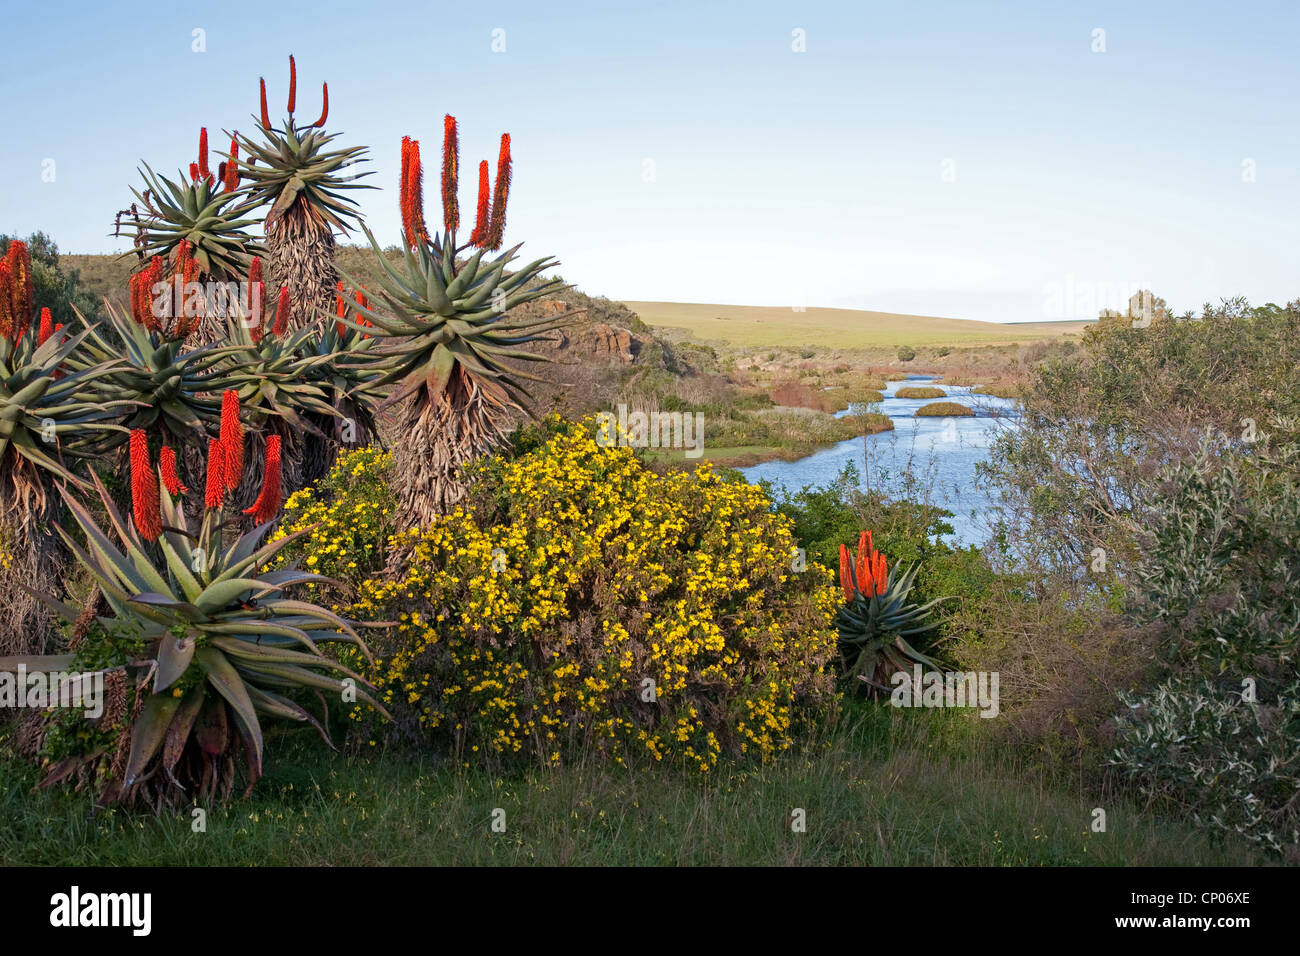 Cape Aloe, Bitter Aloe, Red Aloe, Tap Aloe (Aloe ferox), aloes in front of Breede river, South Africa, Western Cape, Bontebok National Park, Swellendam Stock Photo